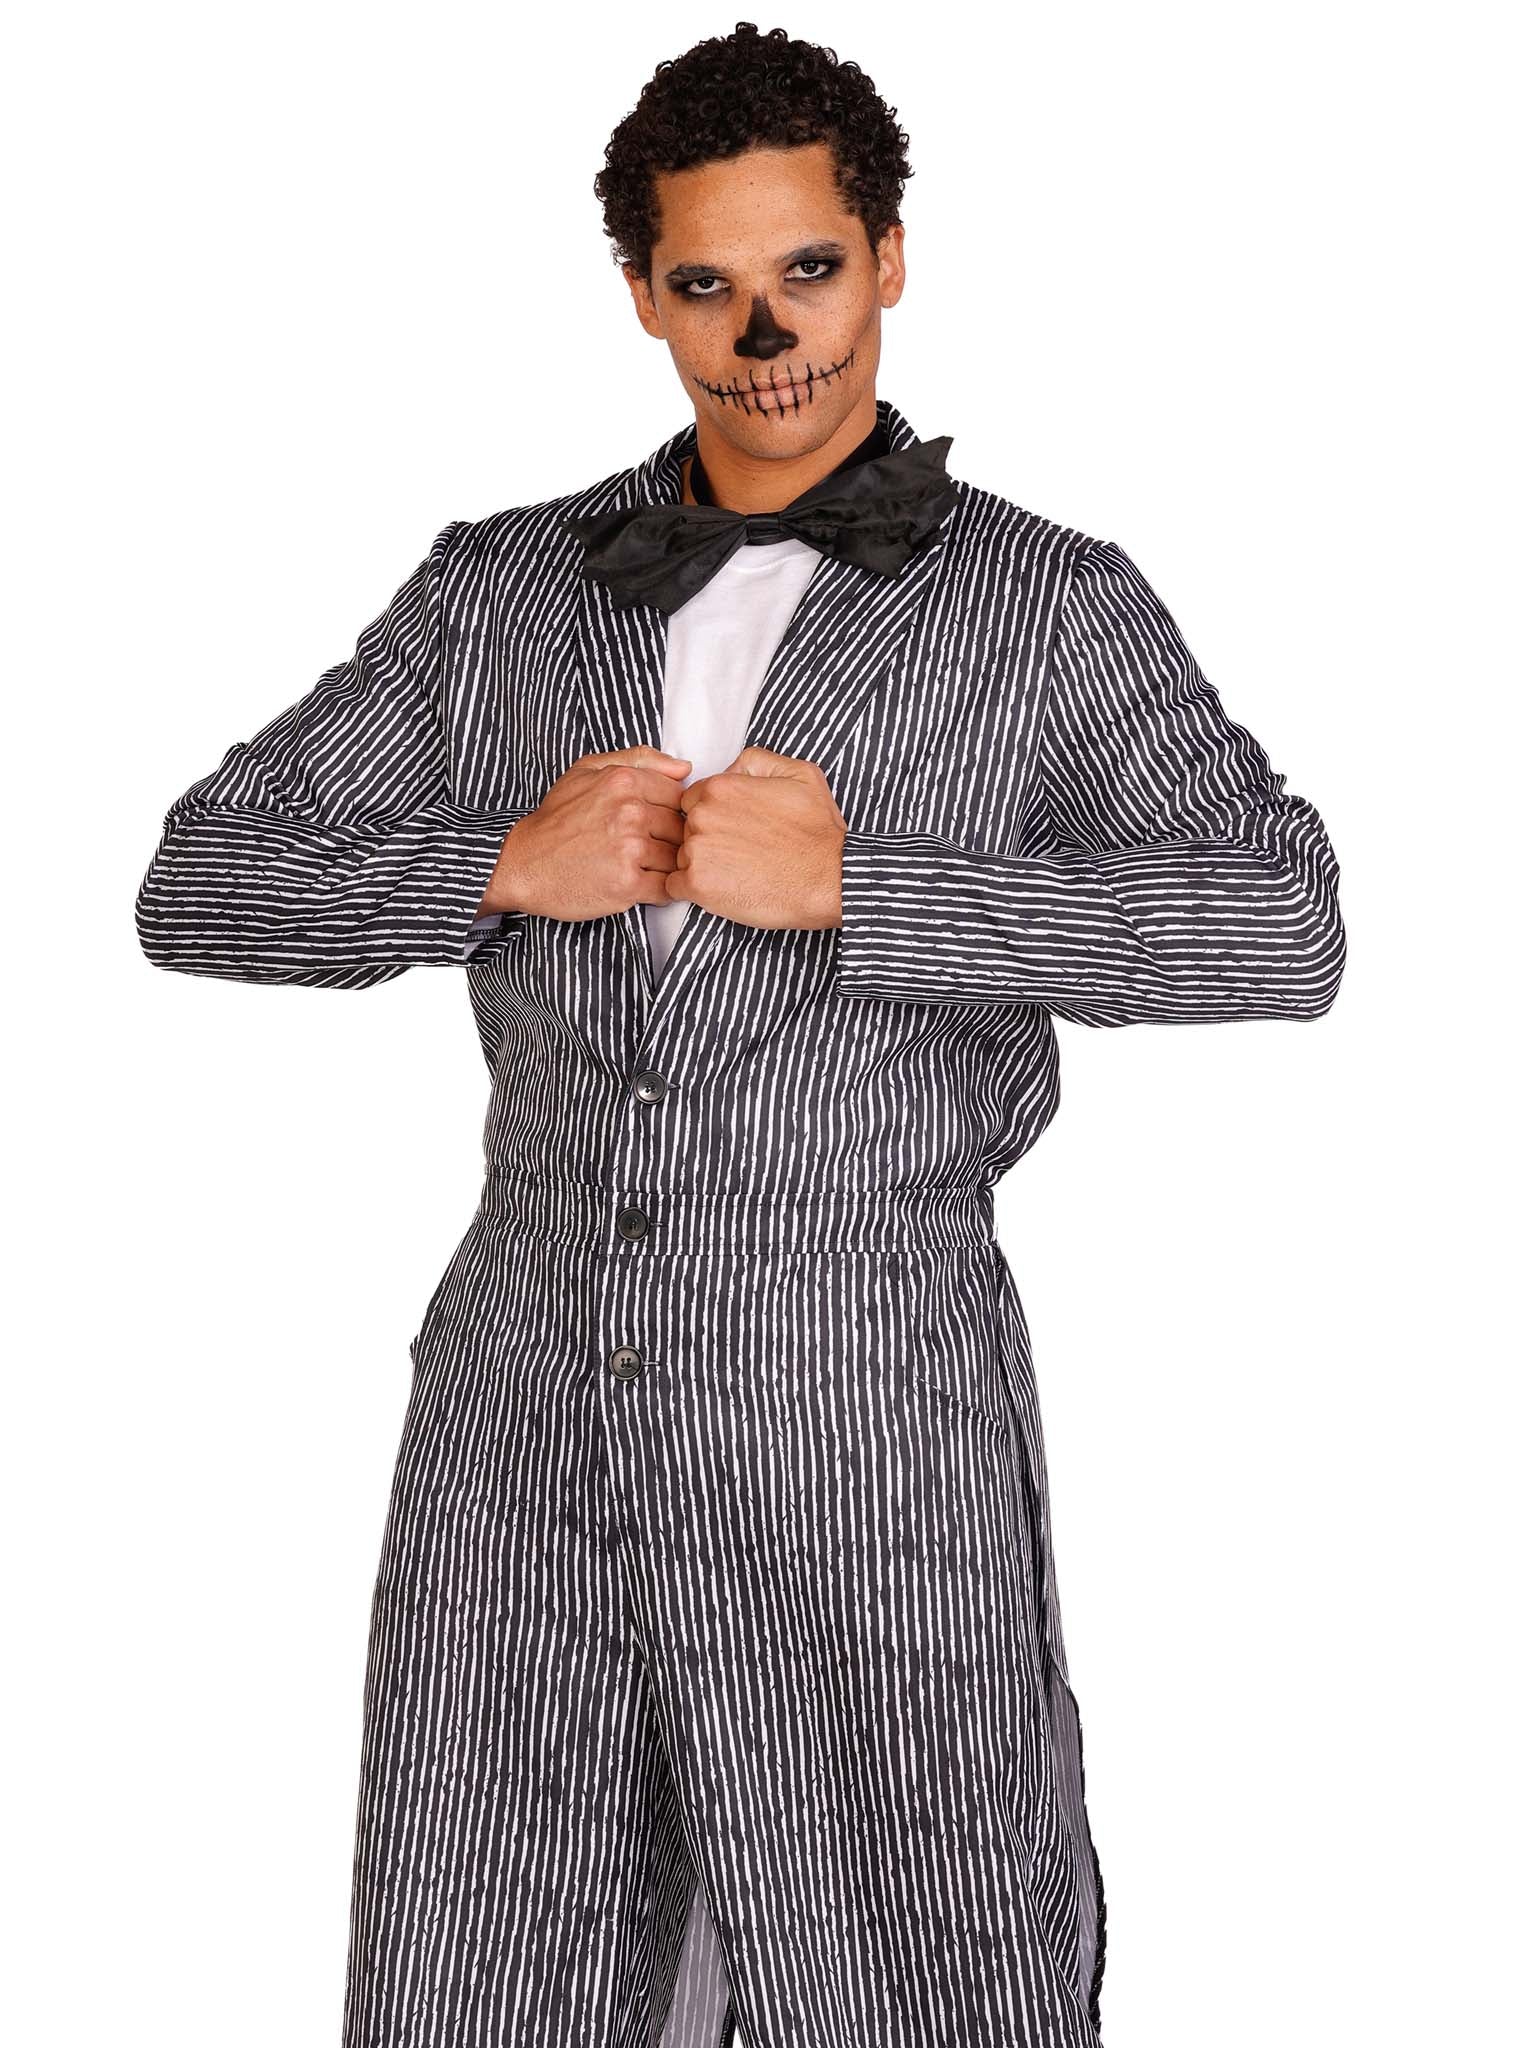 Pinstriped Tux Men's Halloween Costume | Leg Avenue